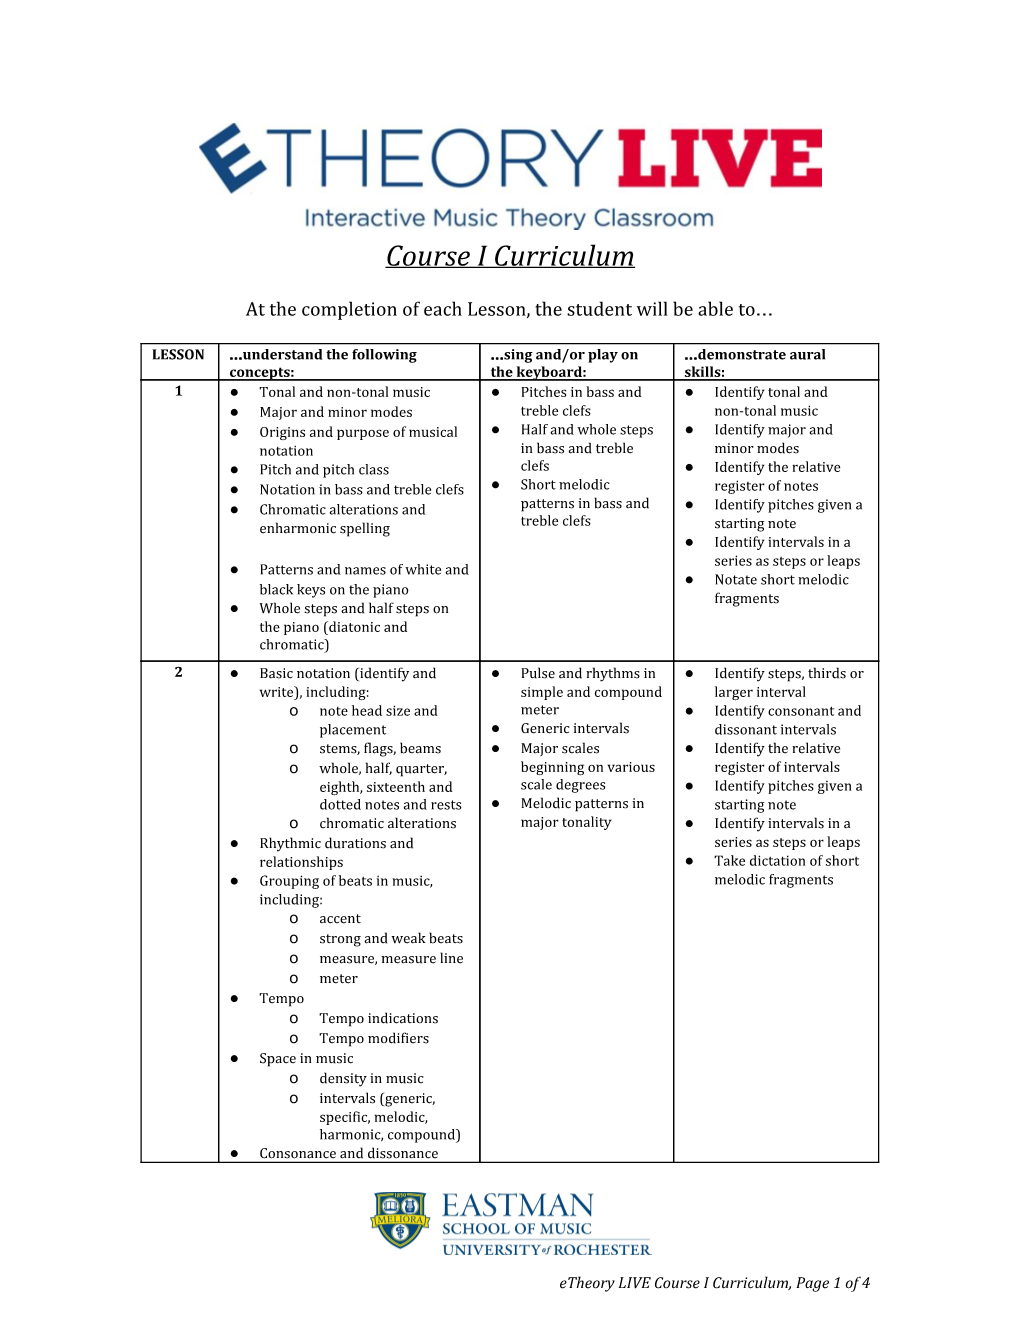 Etheory LIVE Curriculum Document